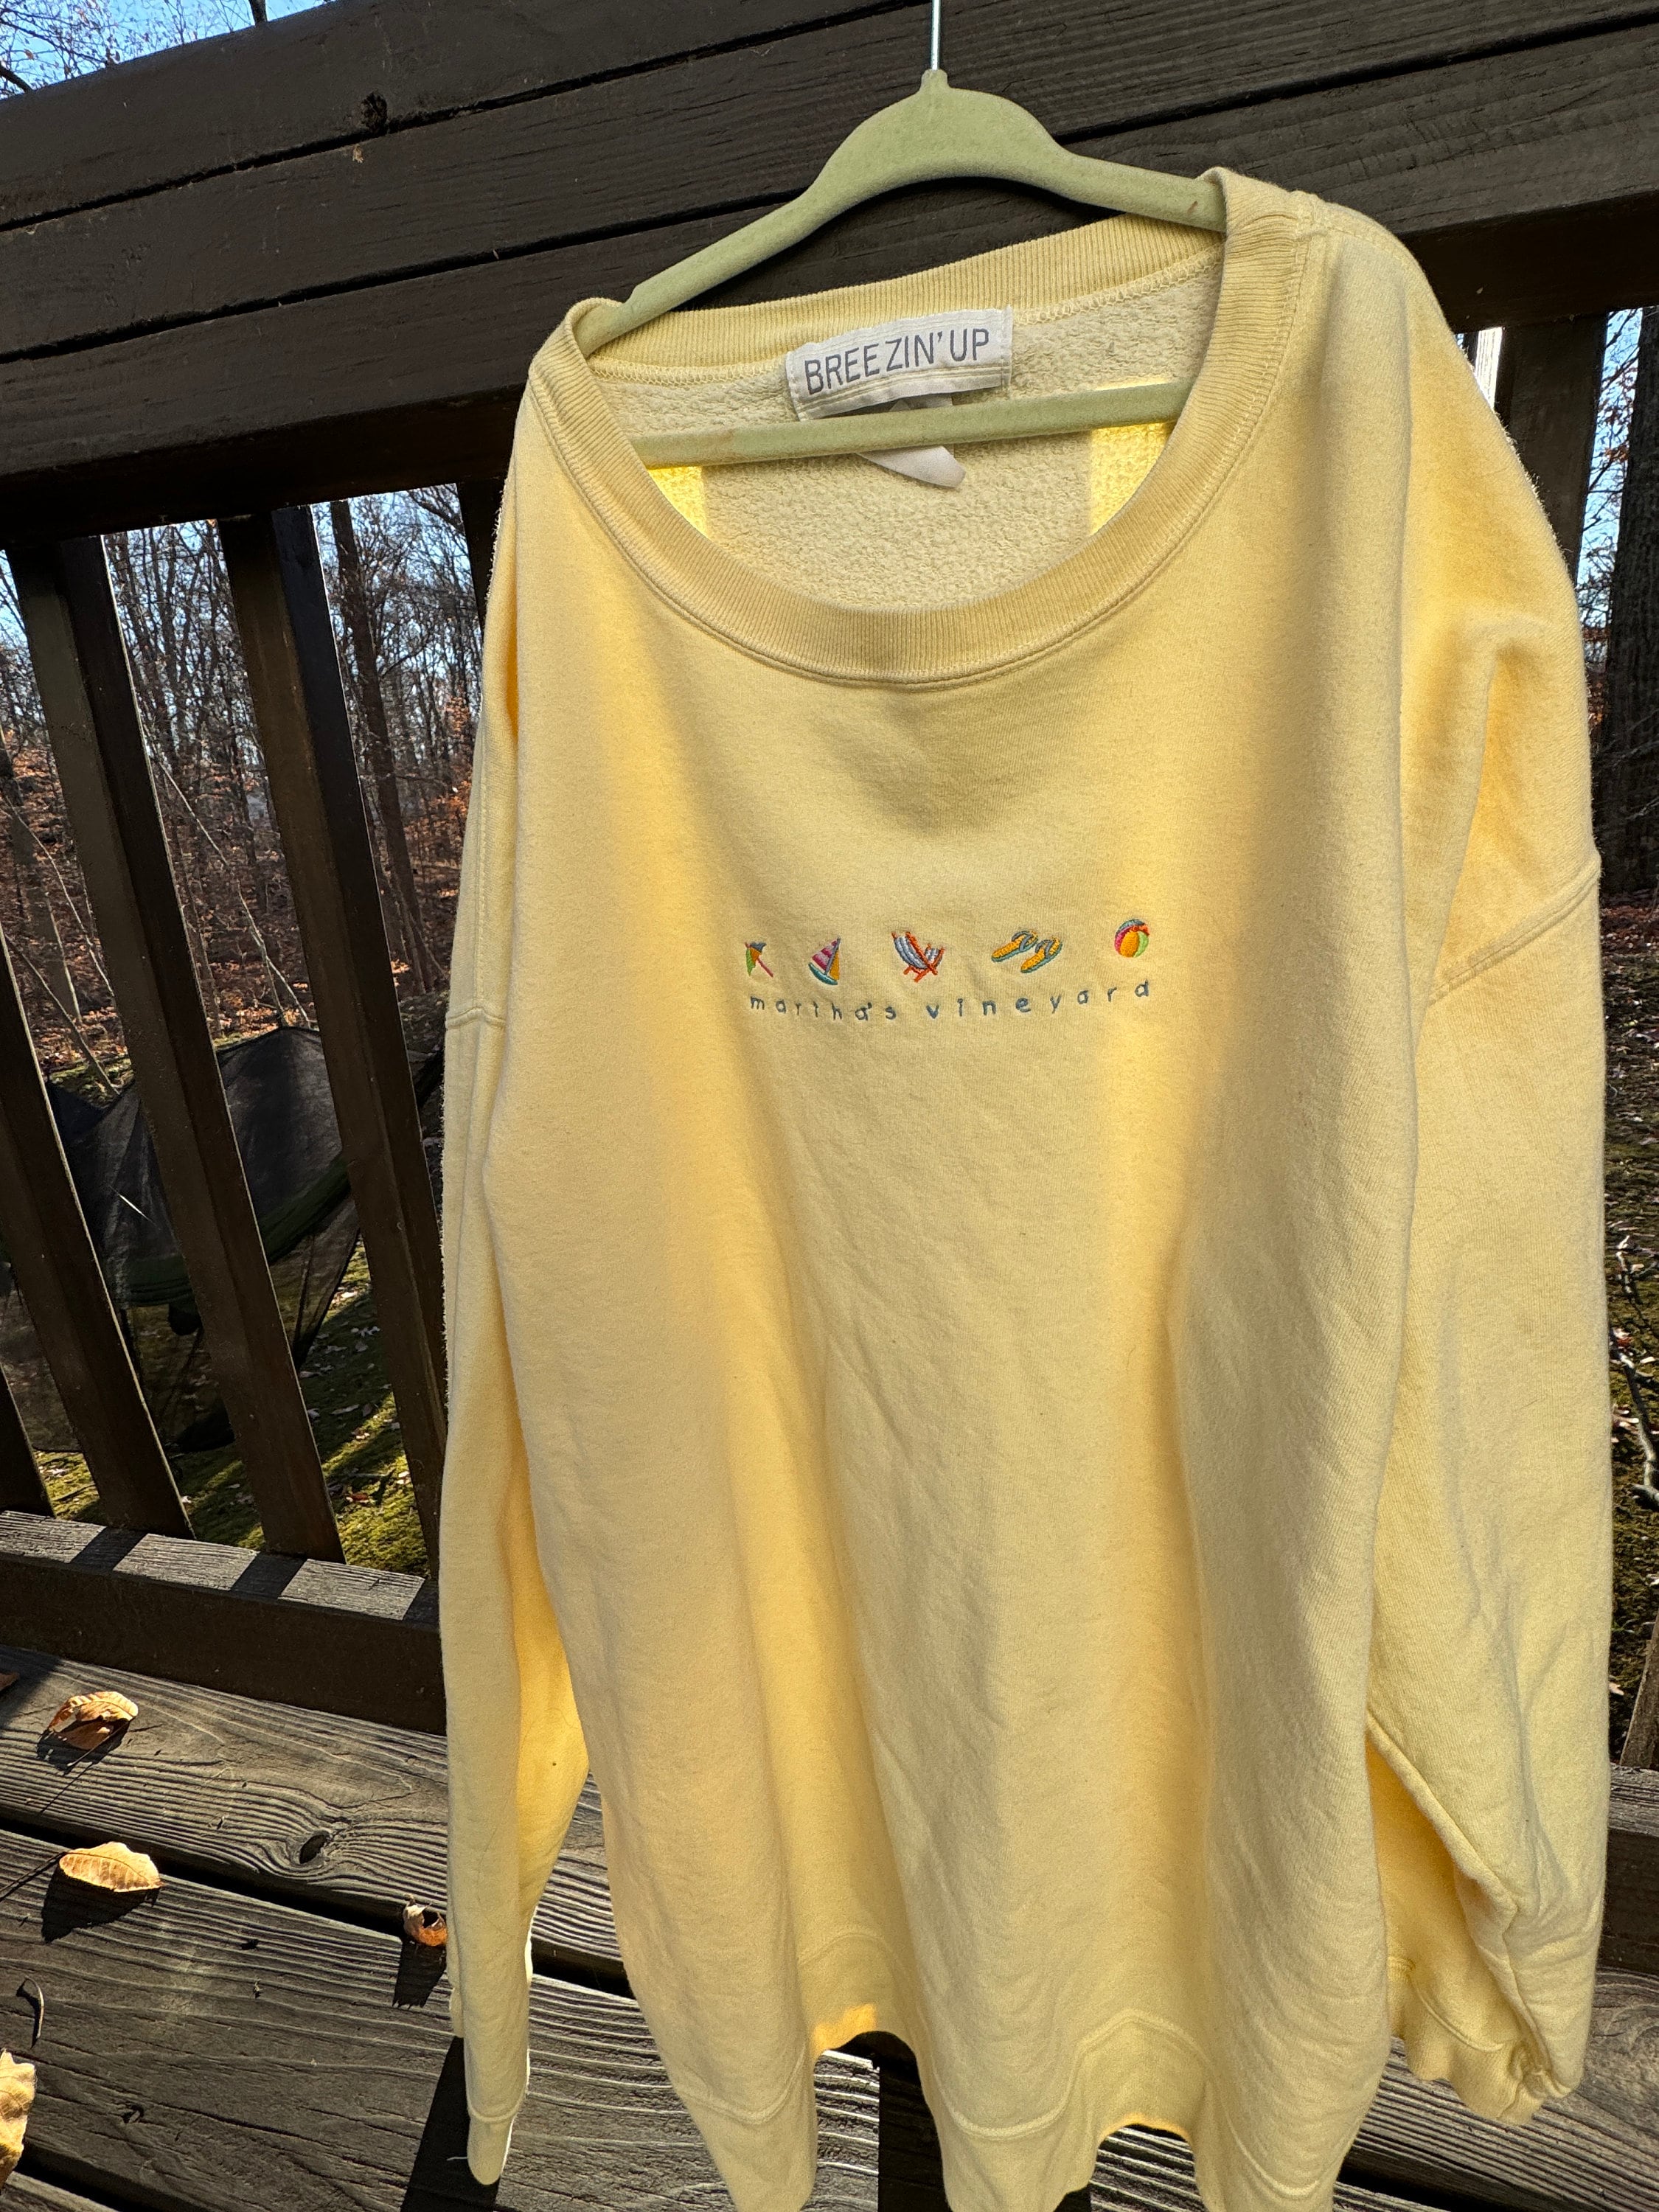 Breezin' up Martha's Vineyard Yellow Embroidered Crewneck Sweater